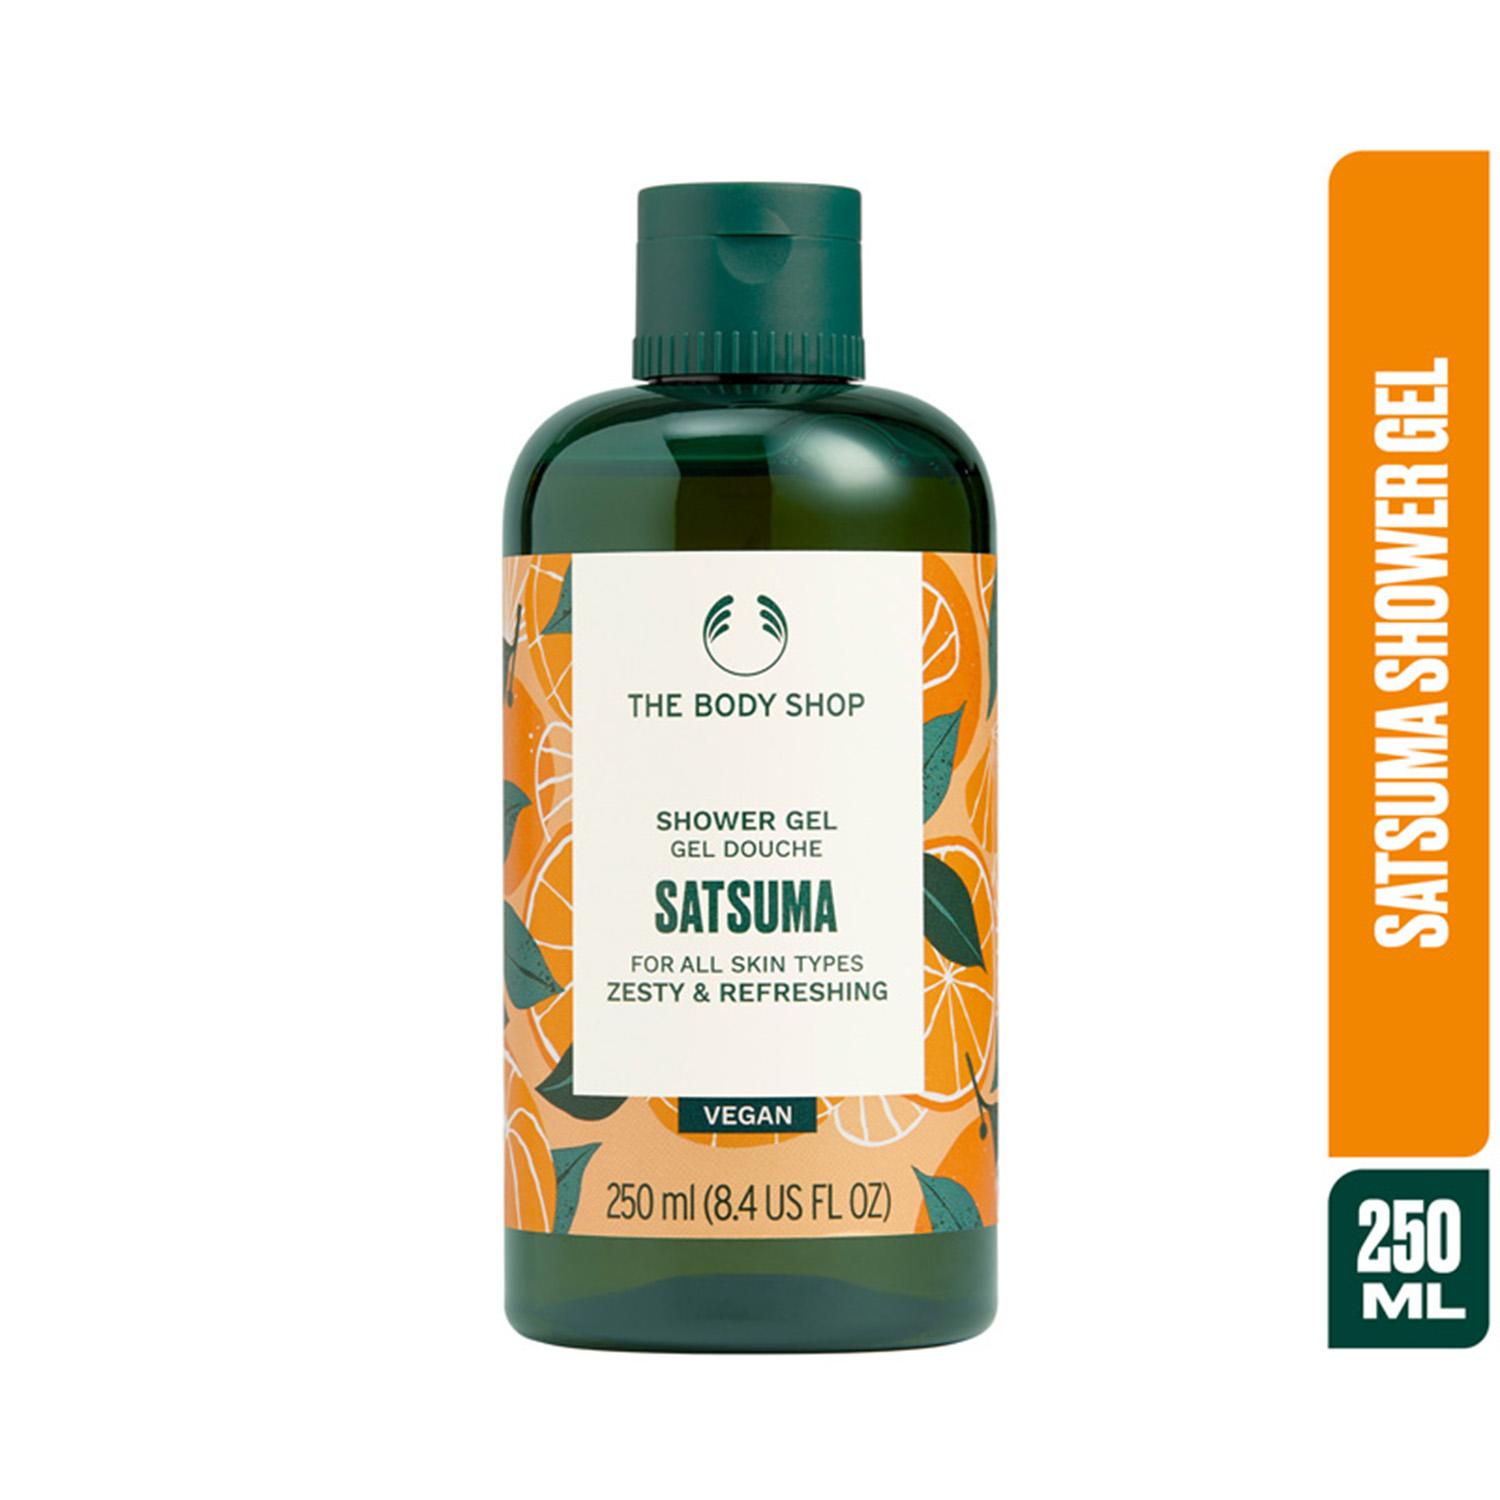 The Body Shop | The Body Shop Satsuma Shower Gel (250ml)